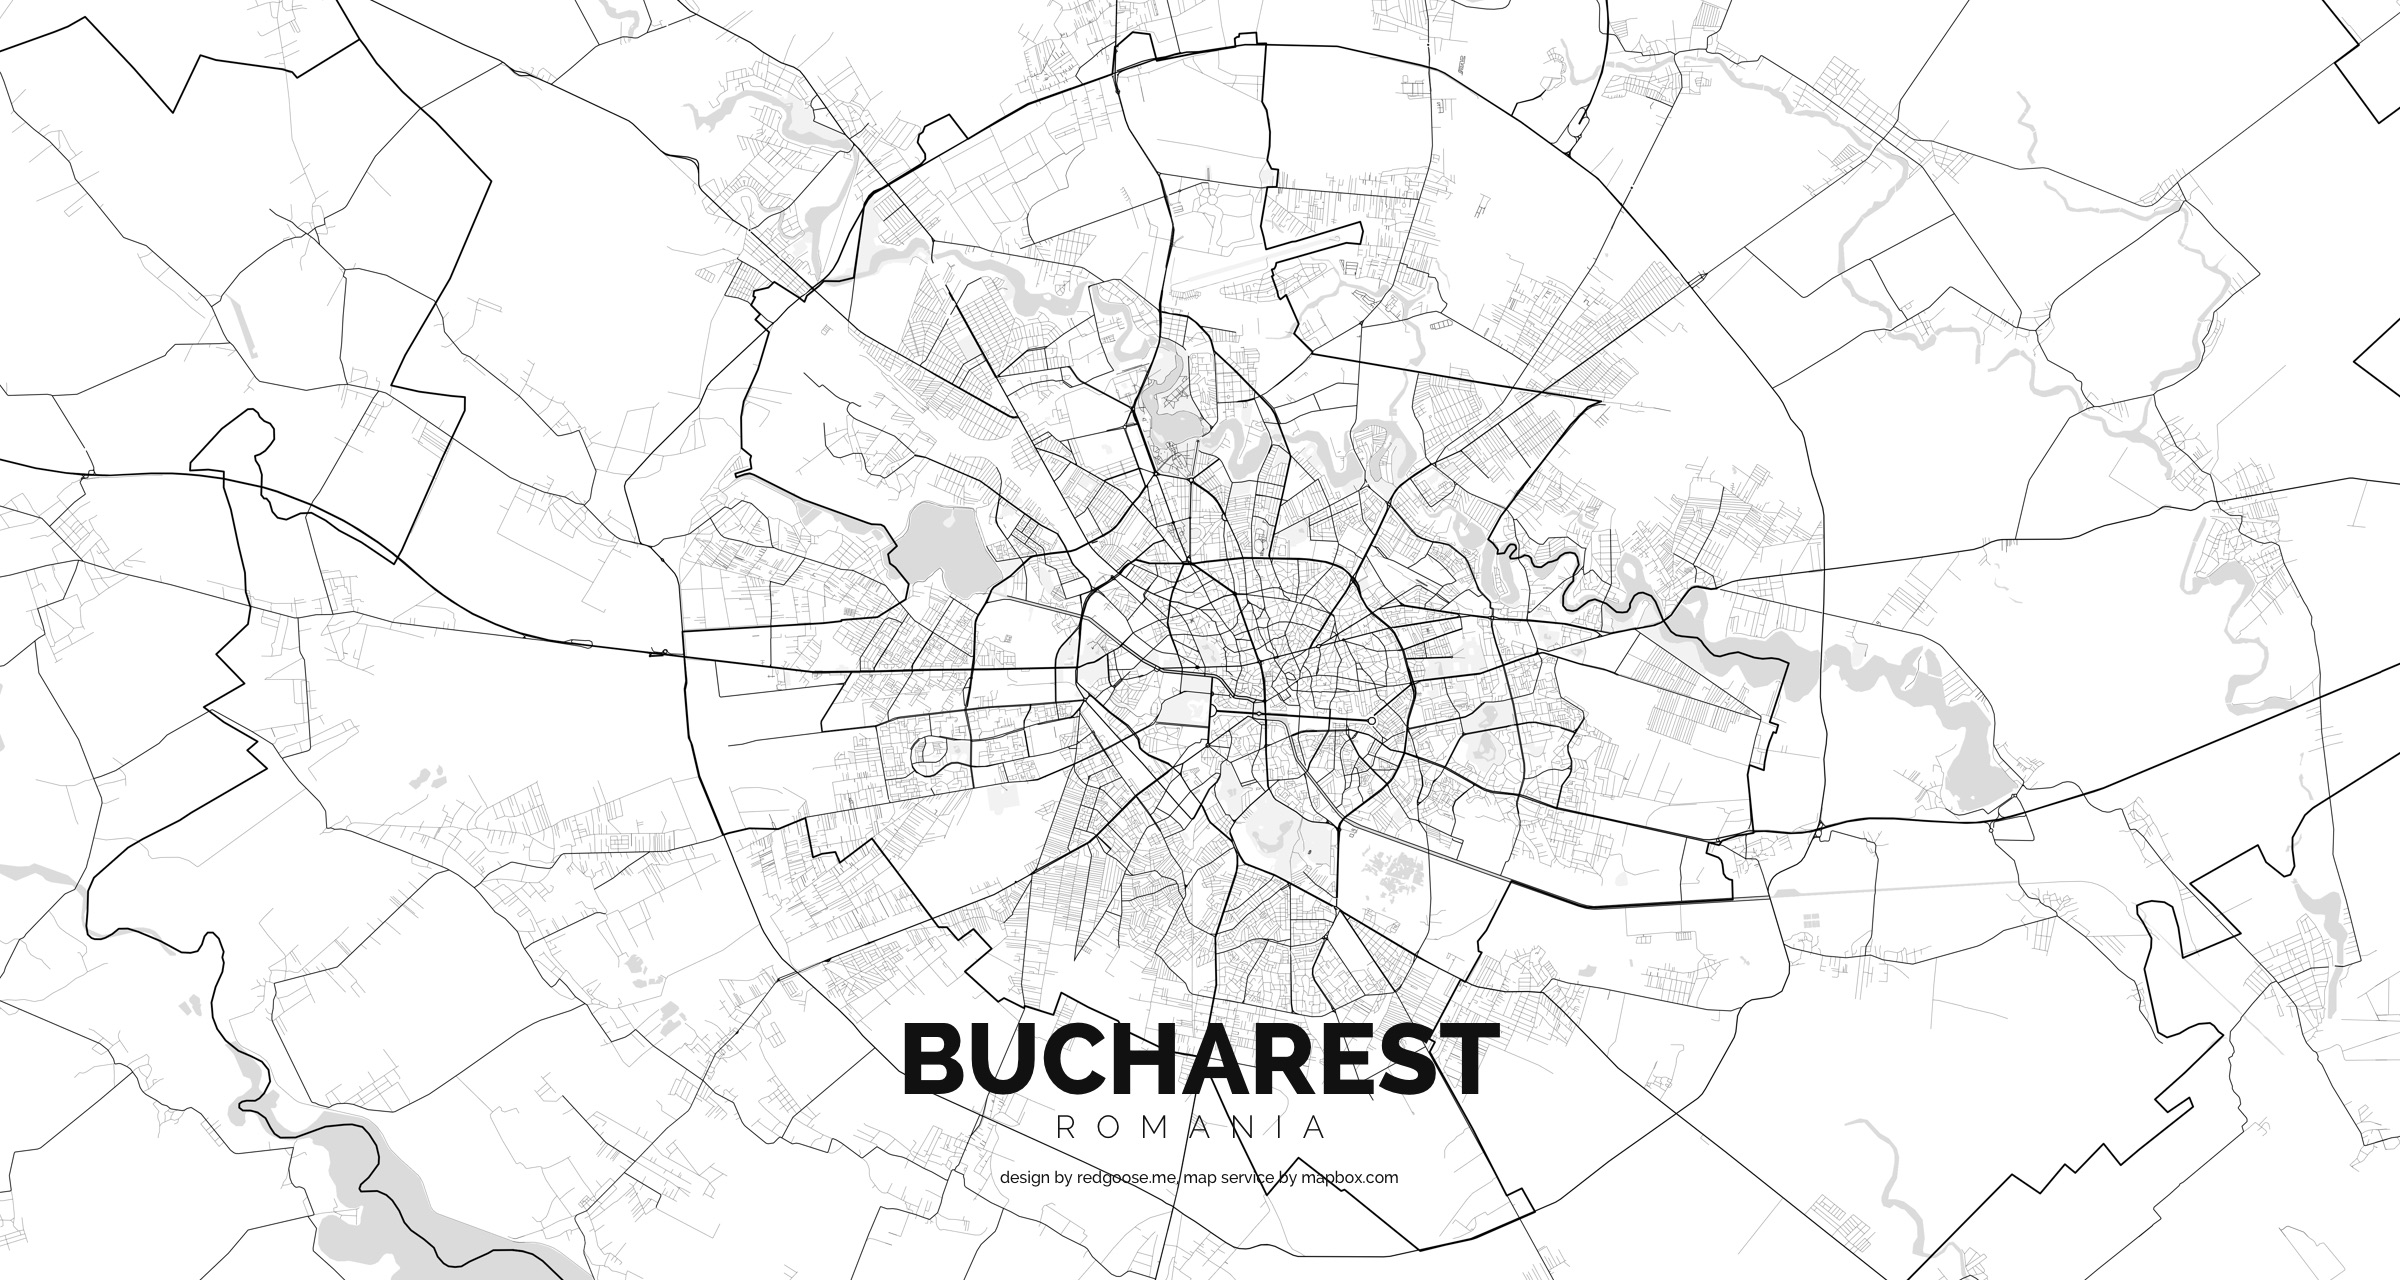 Romania_-_Bucharest.jpg